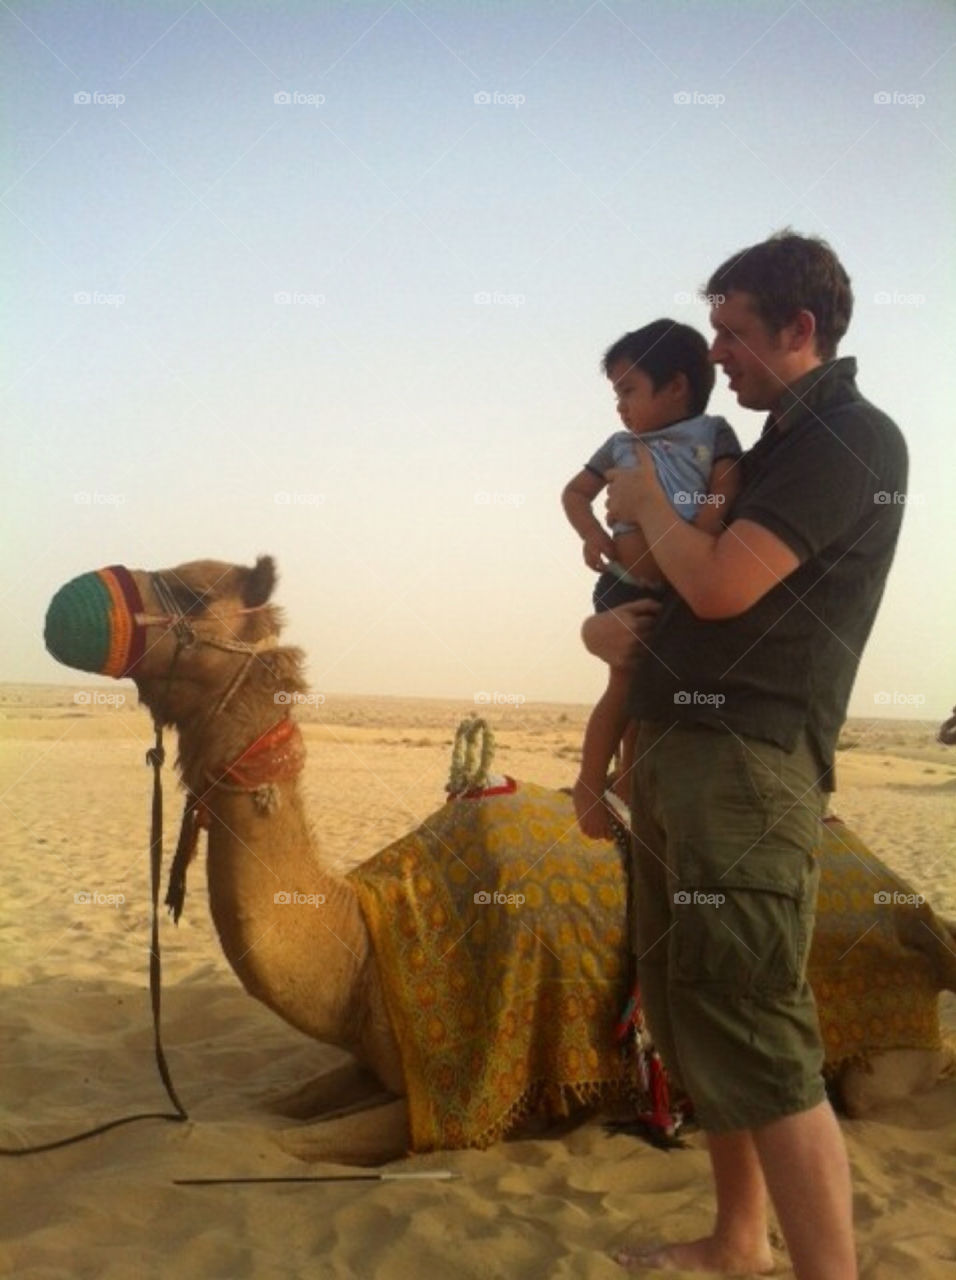 Waiting to ride camel in desert.